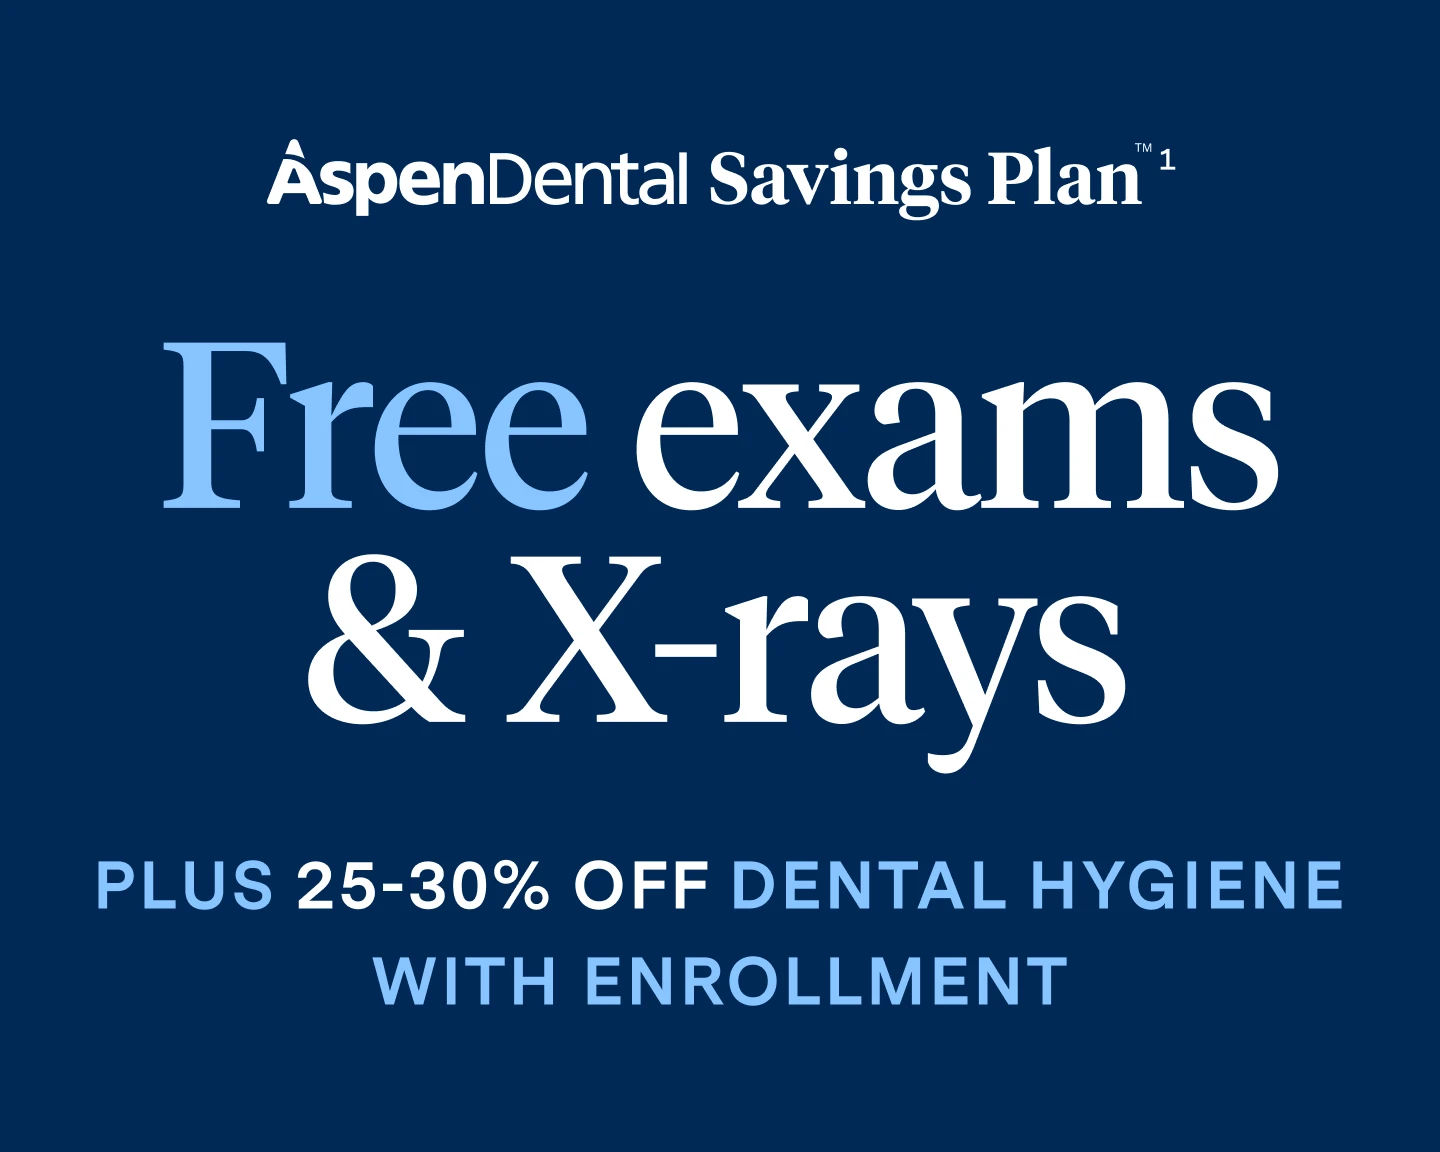 Aspen Dental Savings Plan: Free exam and X-rays. Plus 25-30% off dental hygiene with enrollment.